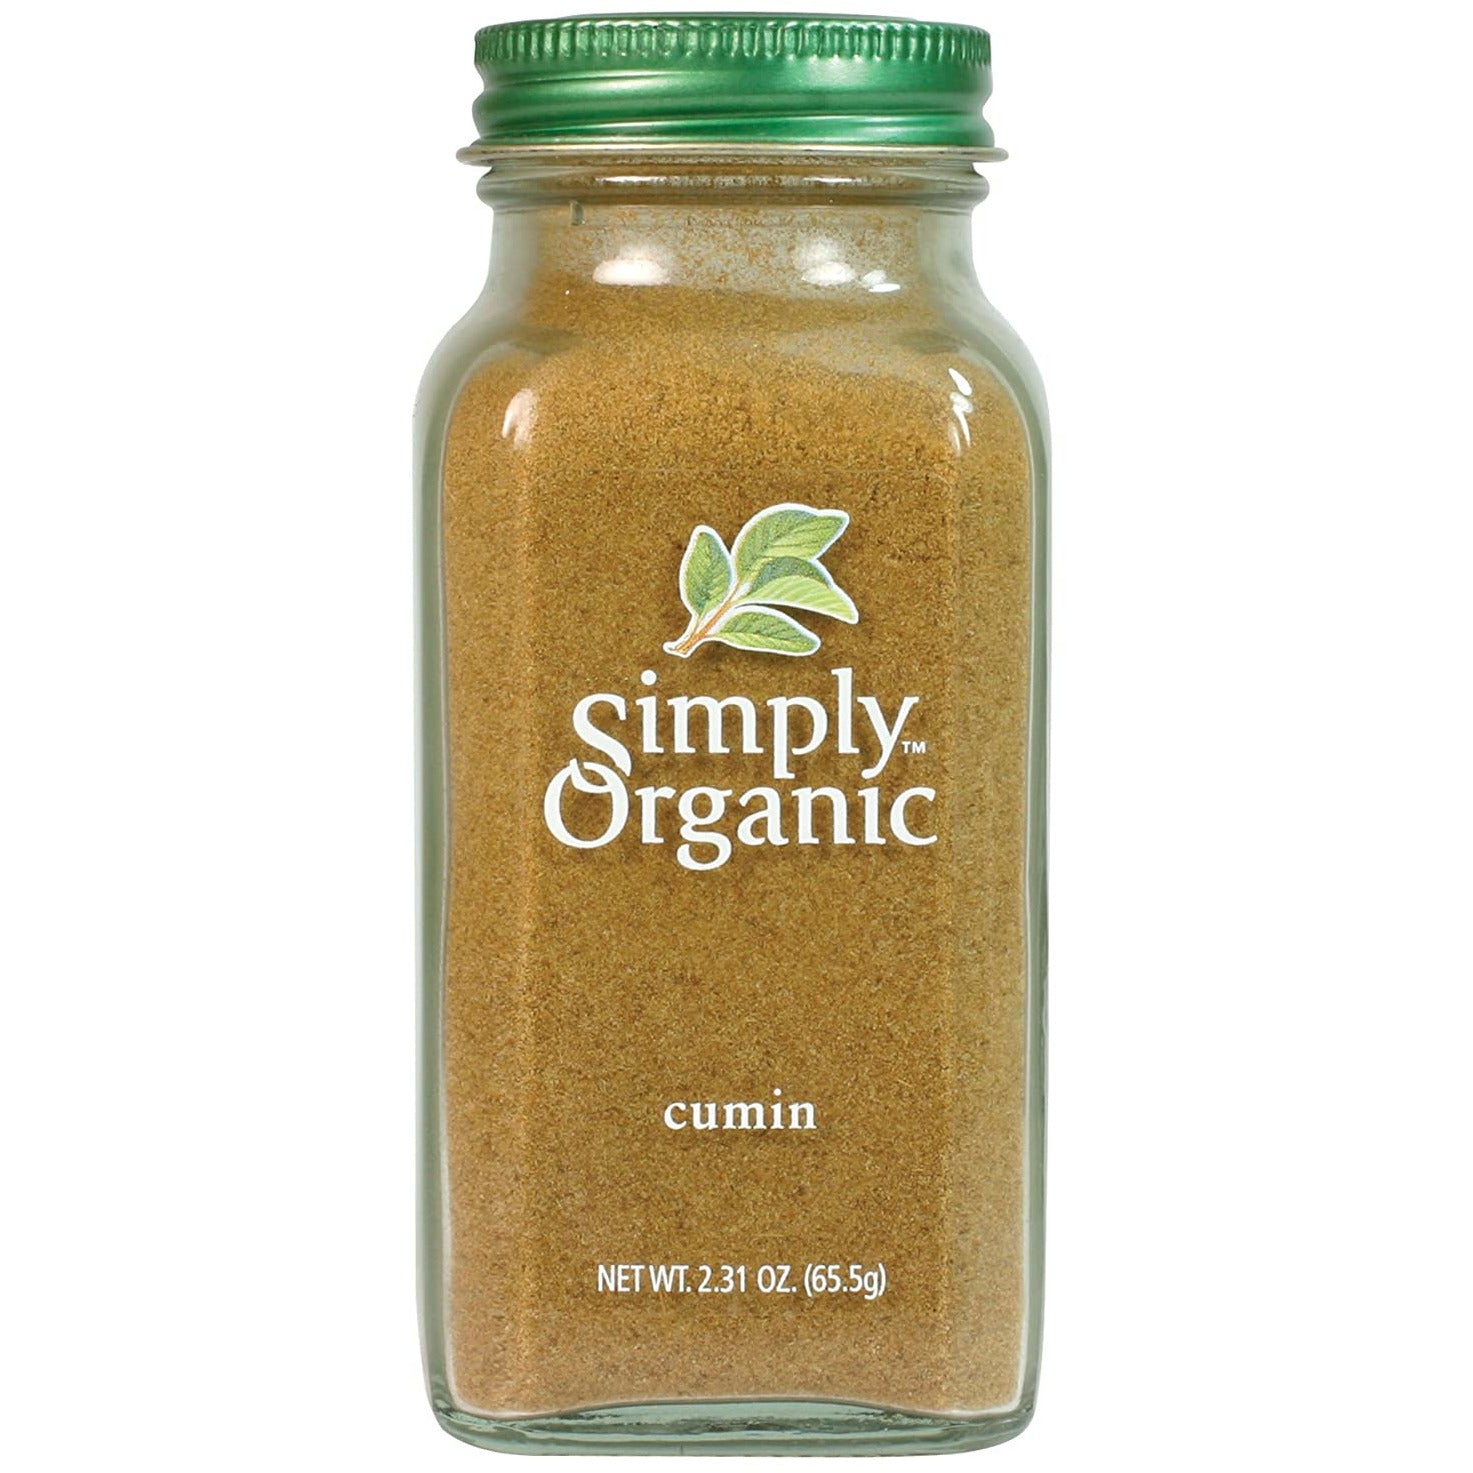 Simply Organic Cumin Seed Ground Certified Organic, 2.31 Oz.